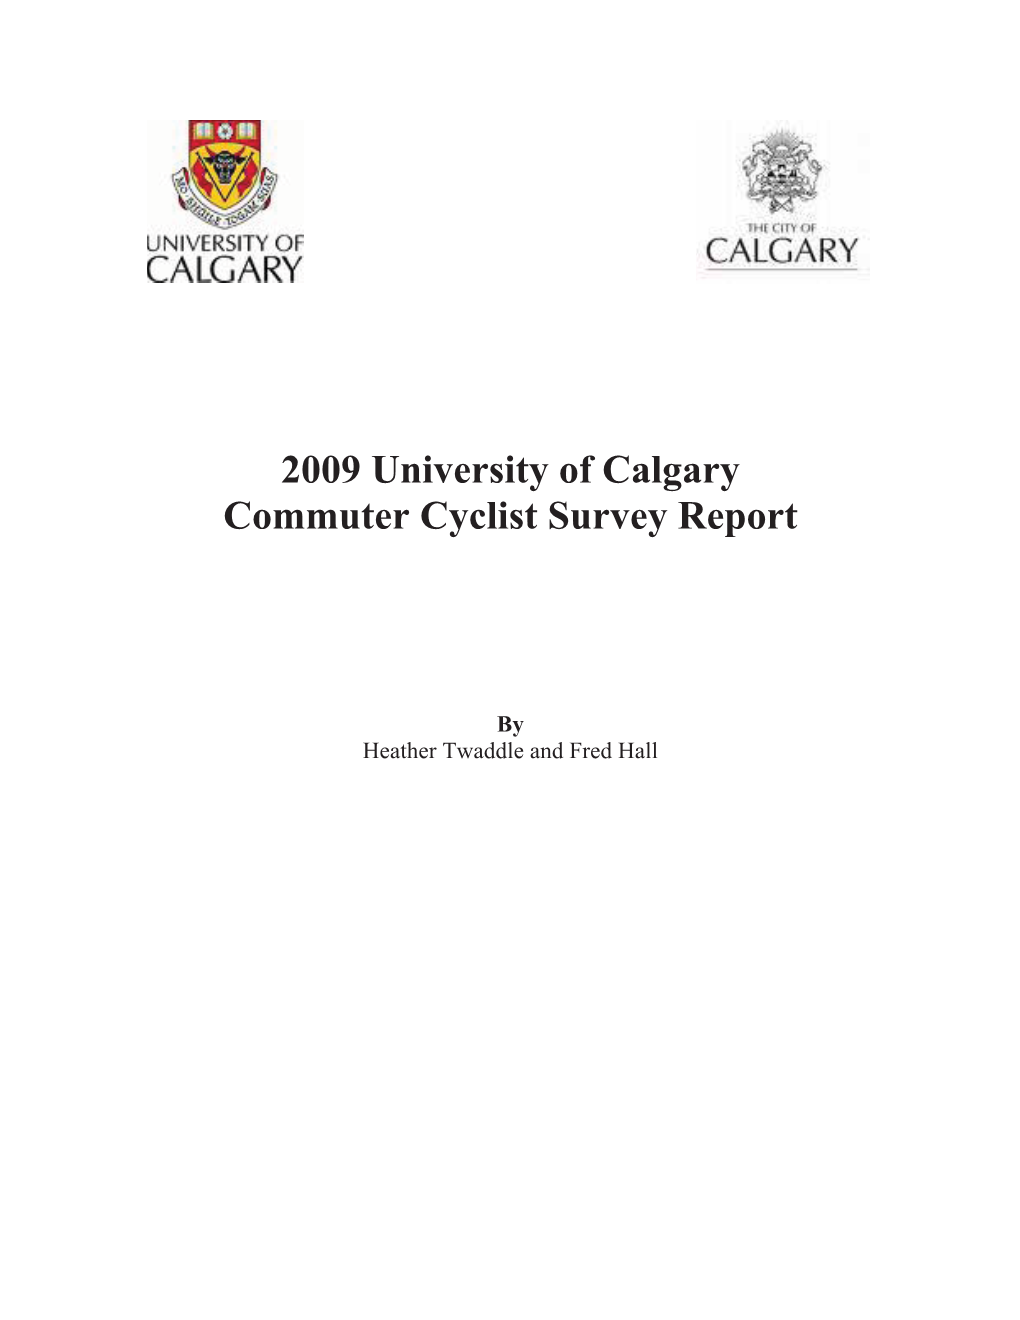 2009 University of Calgary Commuter Cyclist Survey Report